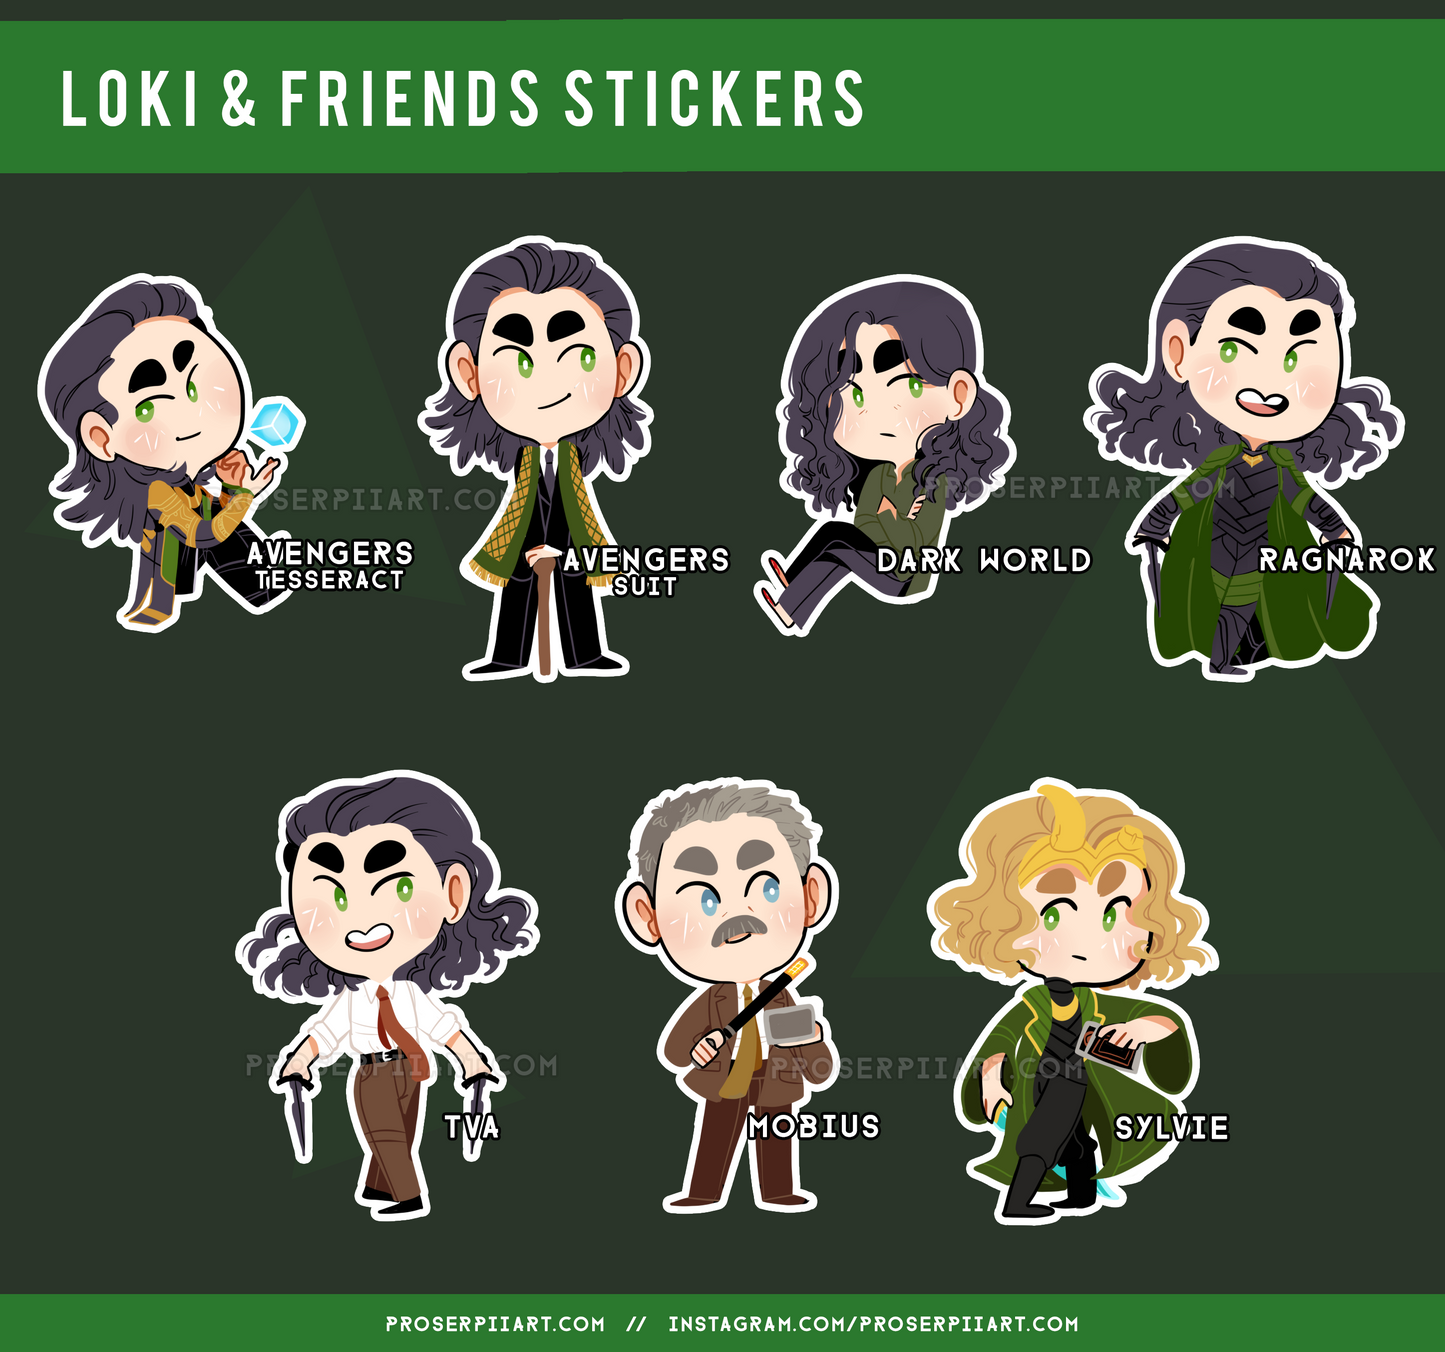 Loki & Friends Stickers